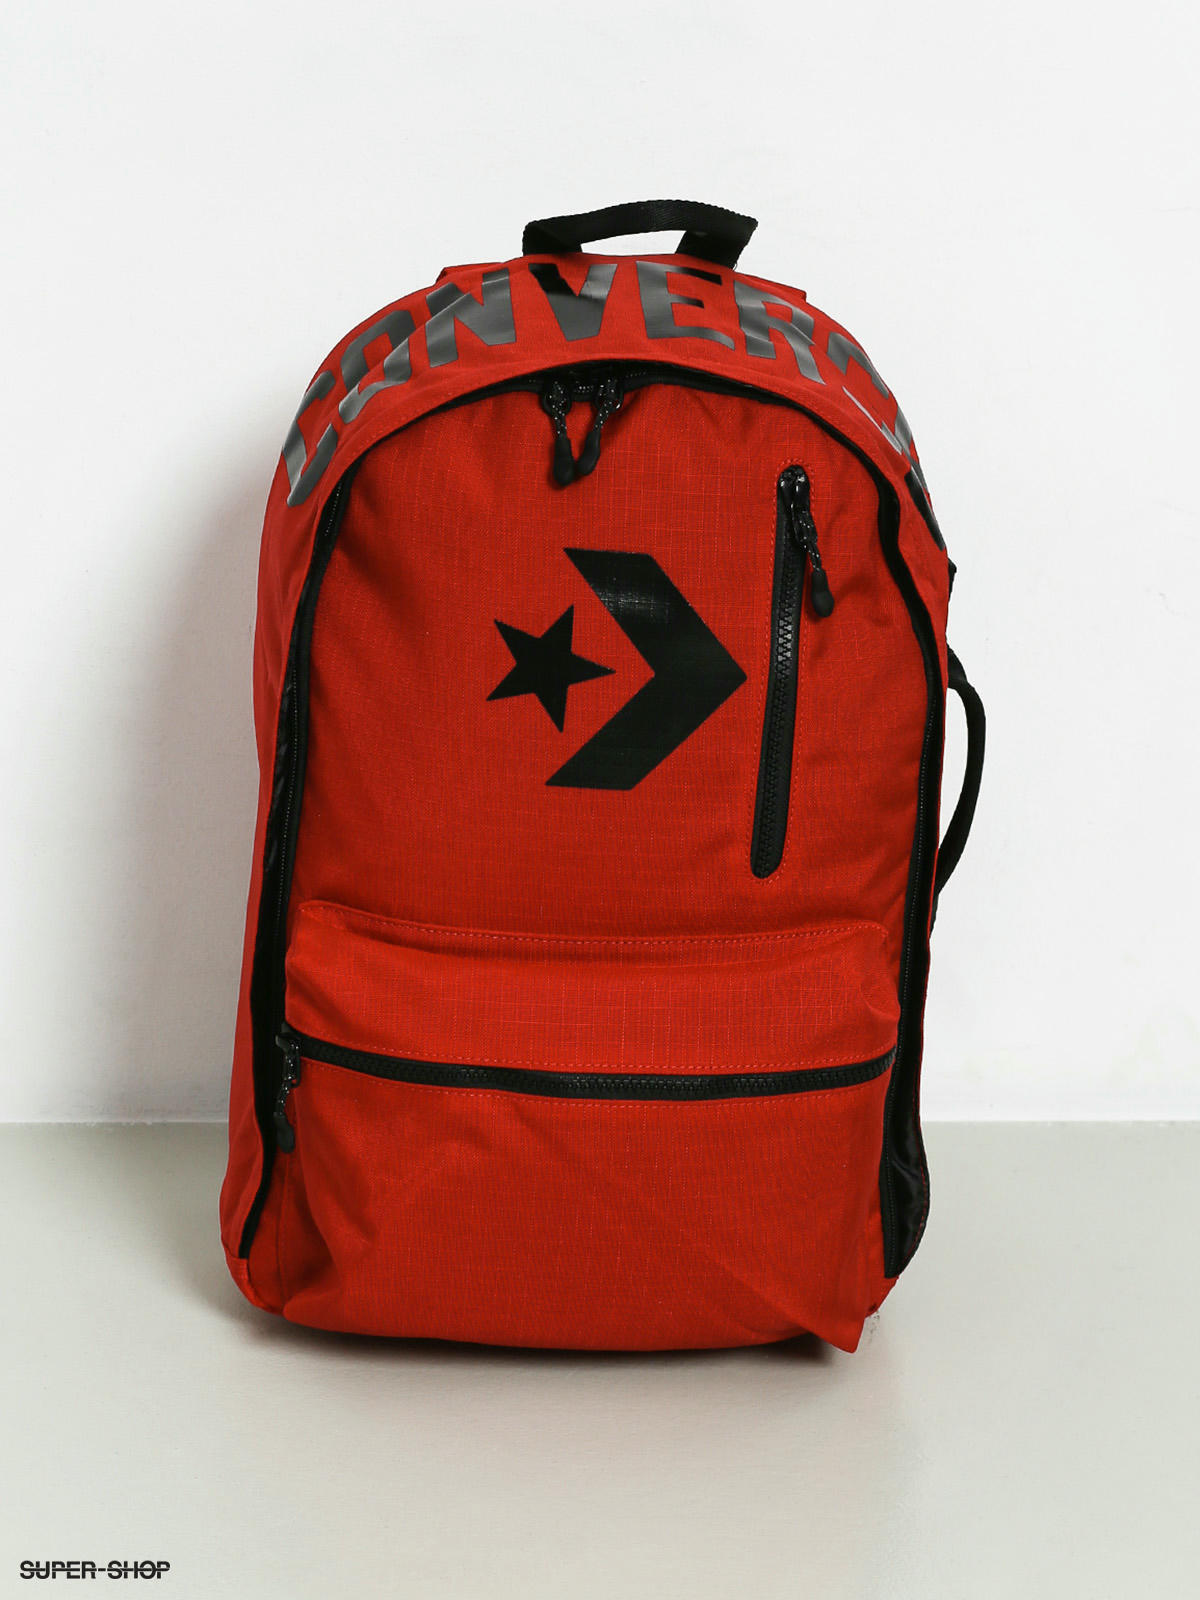 converse cordura backpack